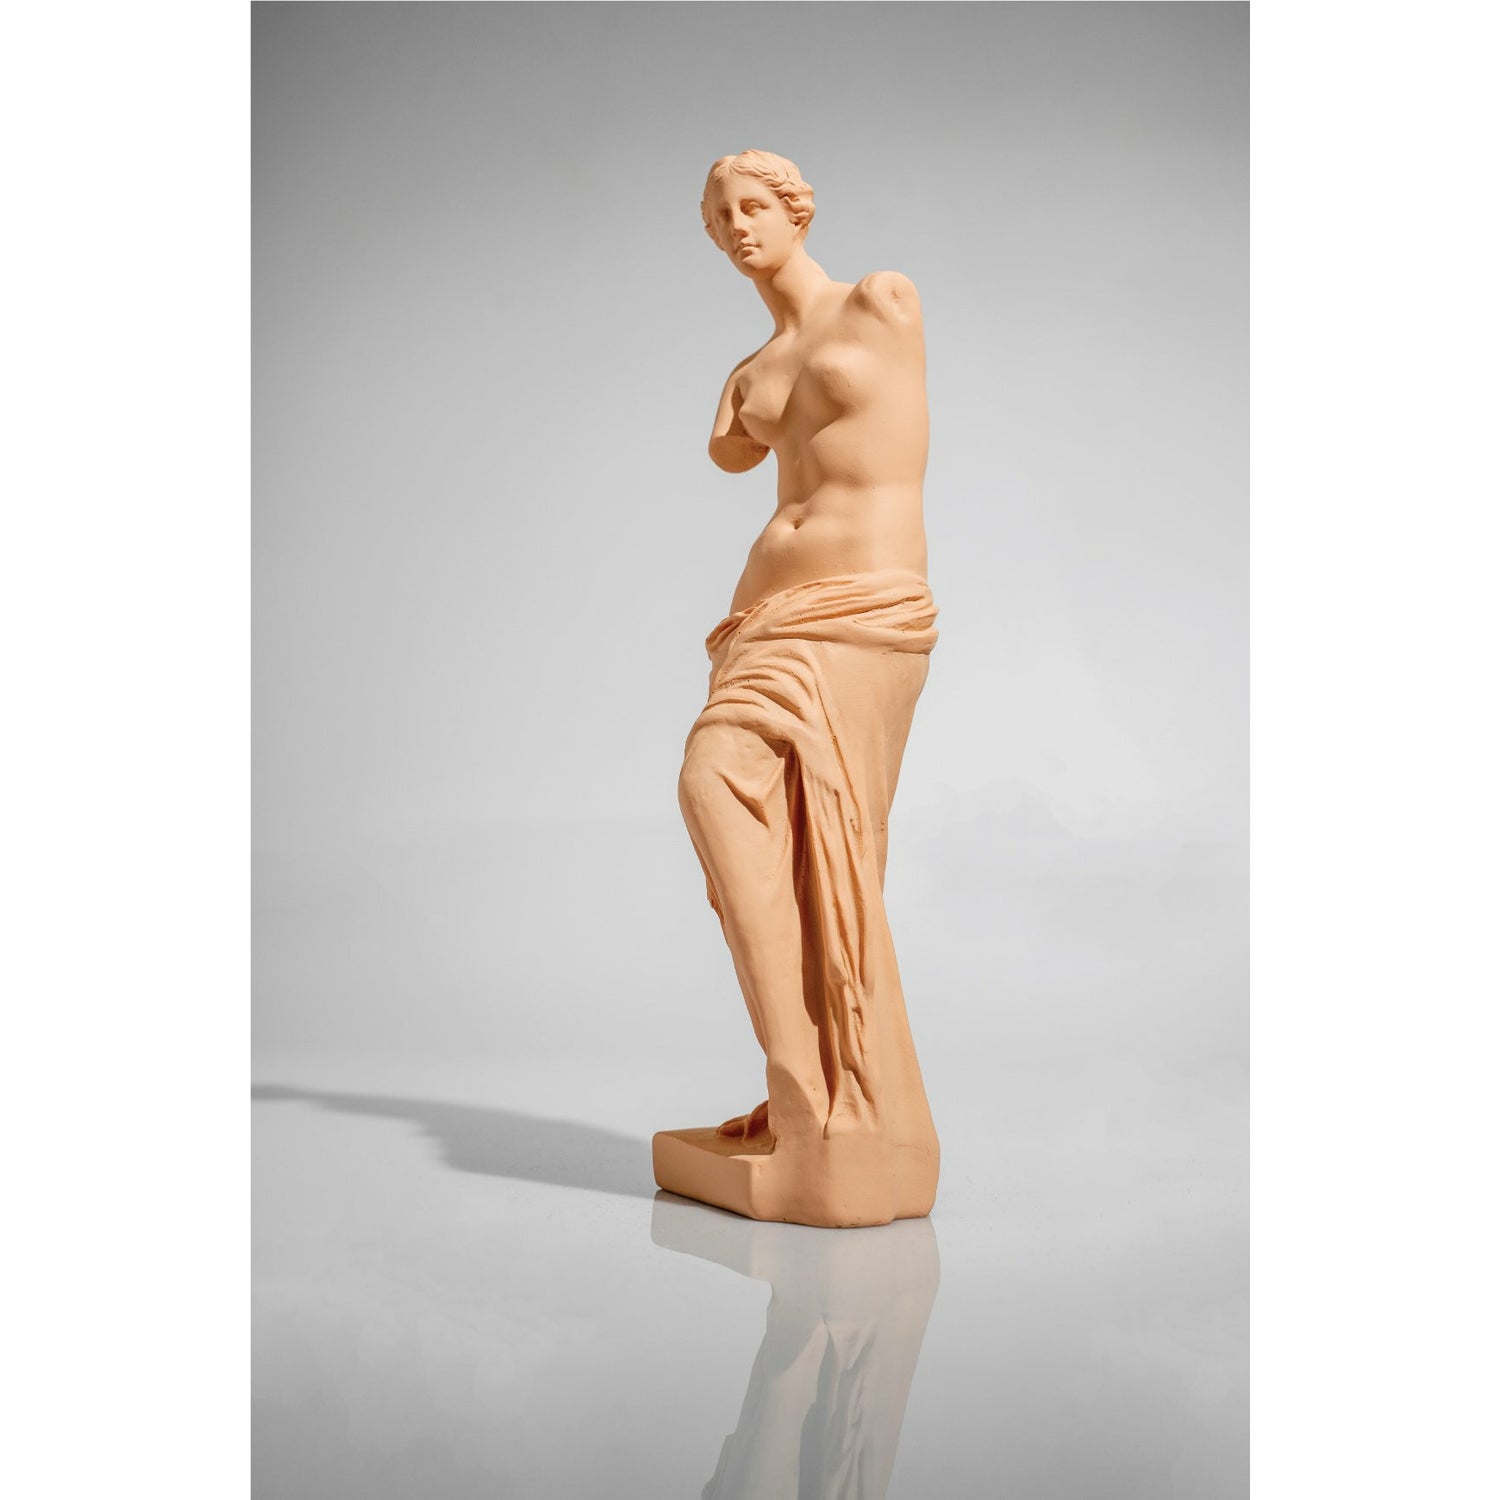 Peach Venus Body Sculpture - Our Peach Venus Body Sculpture is a timeless piece that’s an icon of Roman mythology.